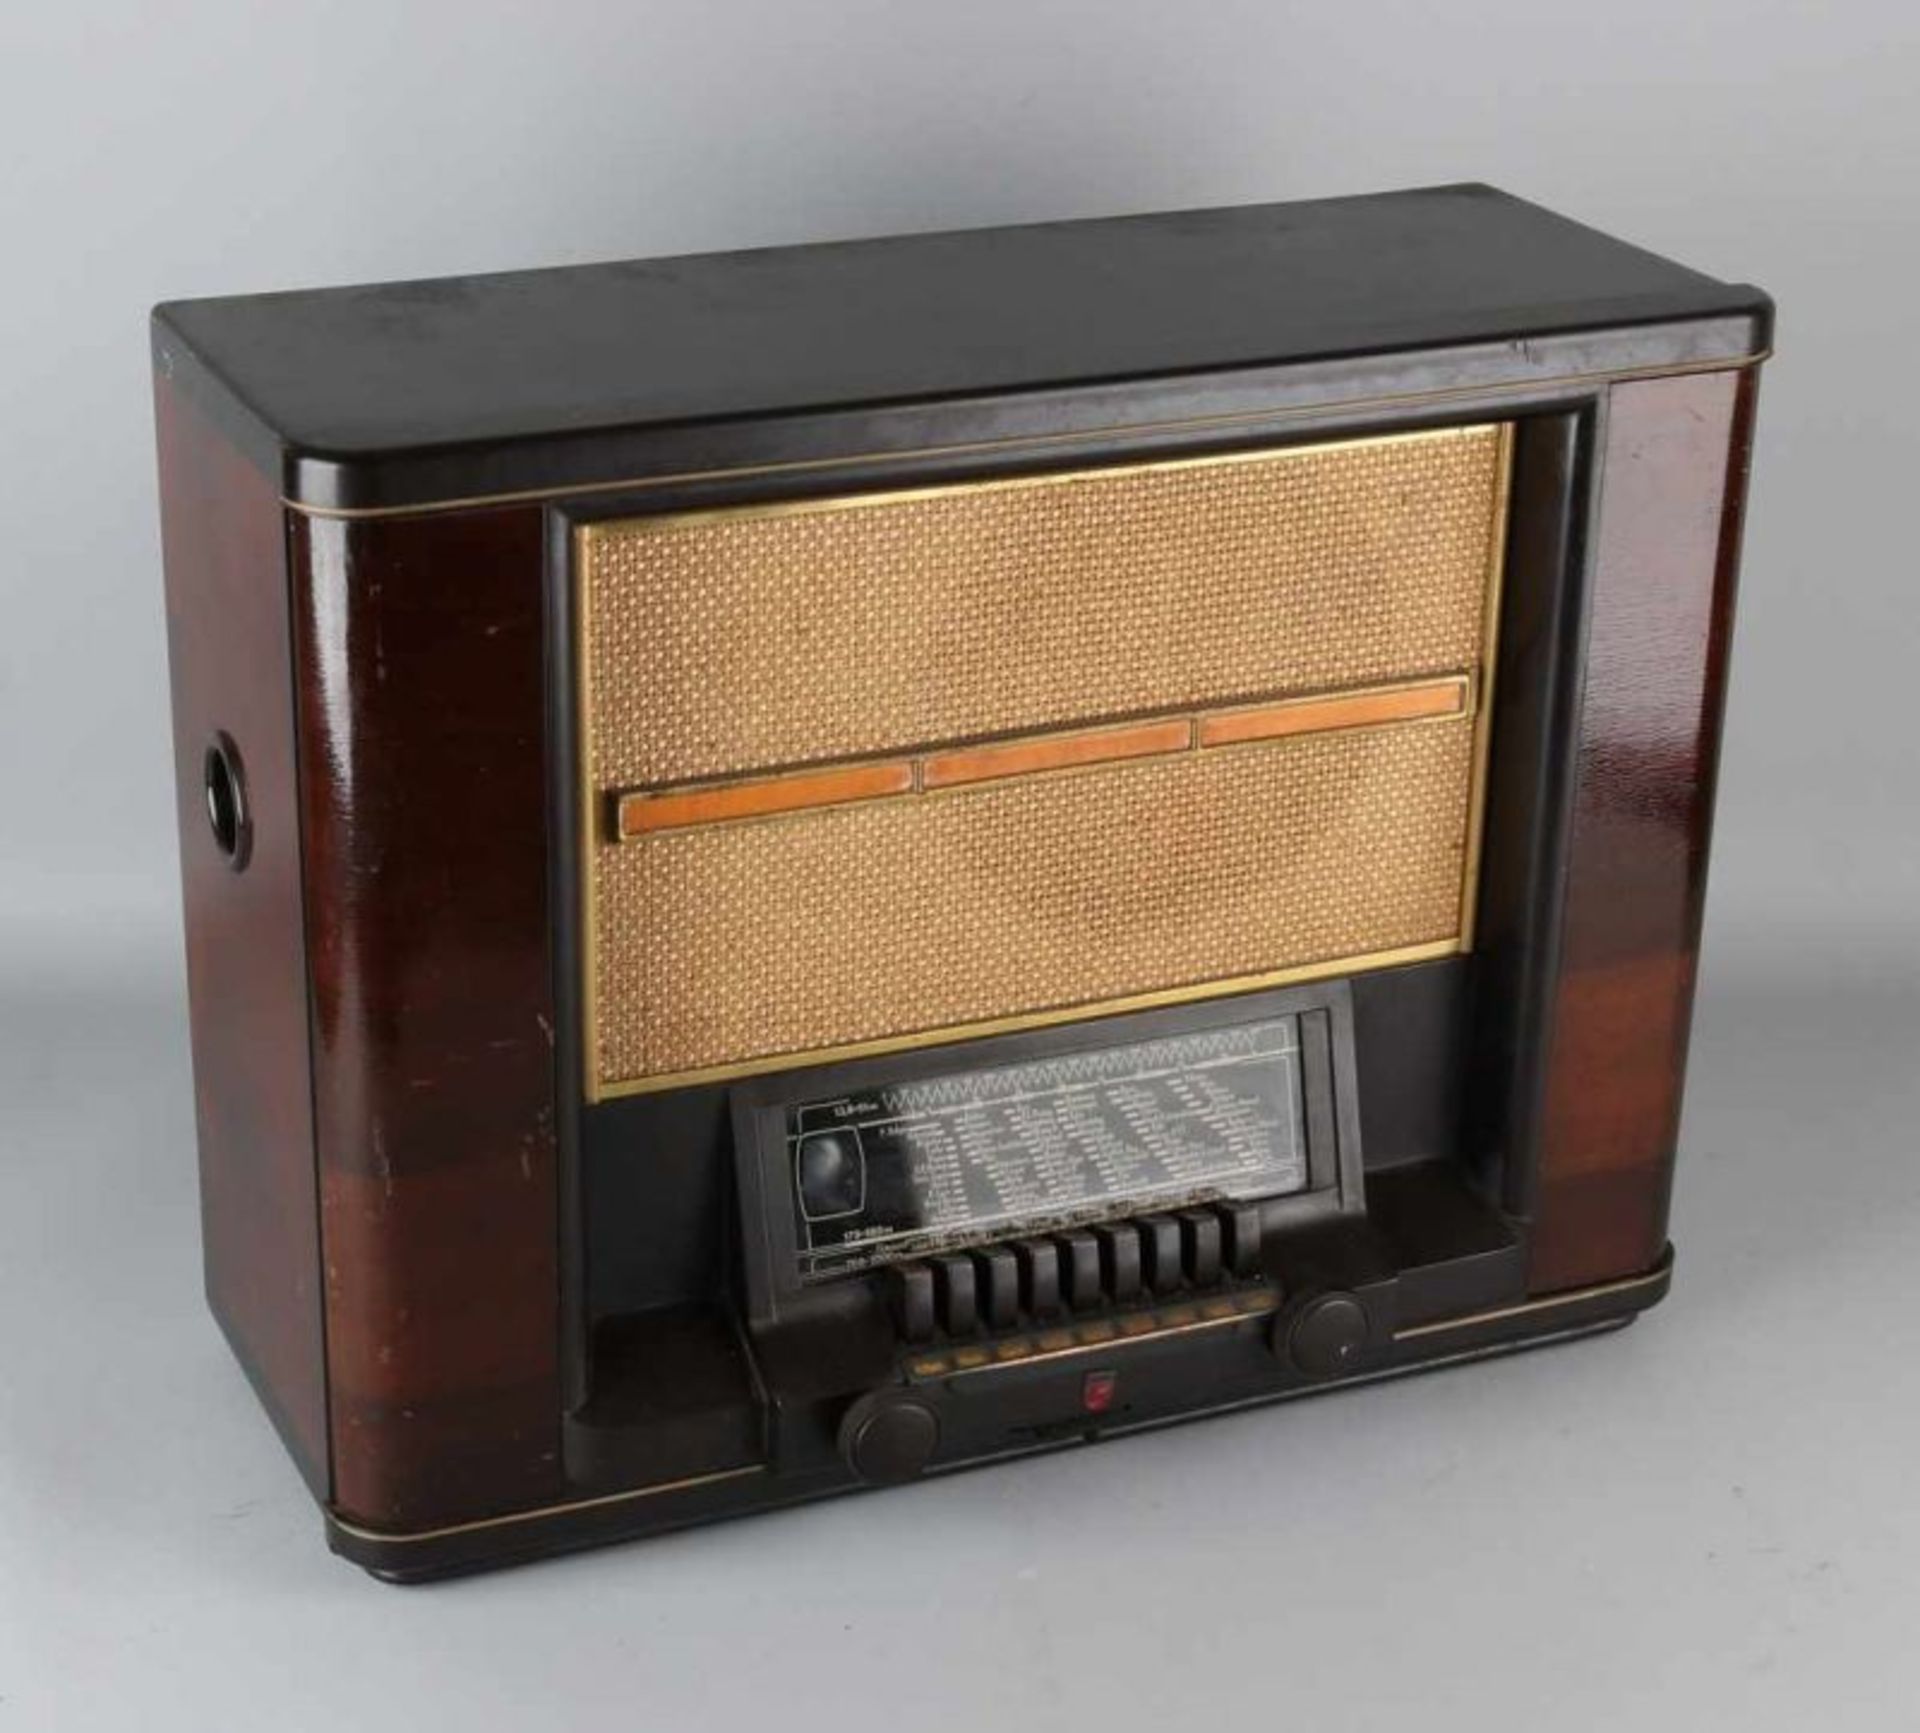 Antique Philips radio bakelite. Anno 1936. Type 815 A. Size: 41 x 21 x 52 cm. In good condition.